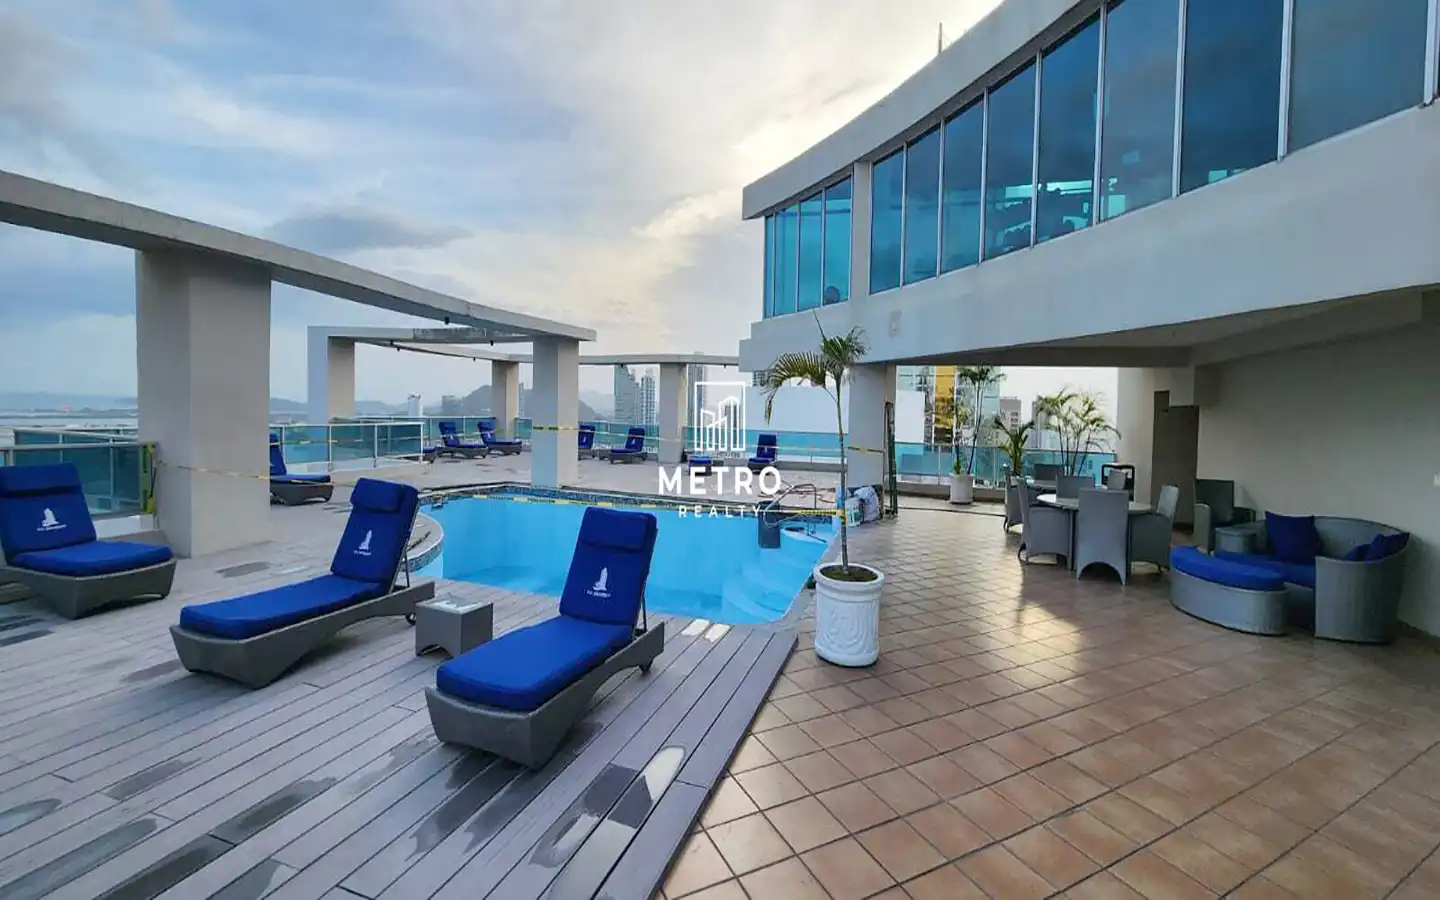 Grand Bay Tower Cinta Costera Panama Apartment for Sale swimming pool corner view